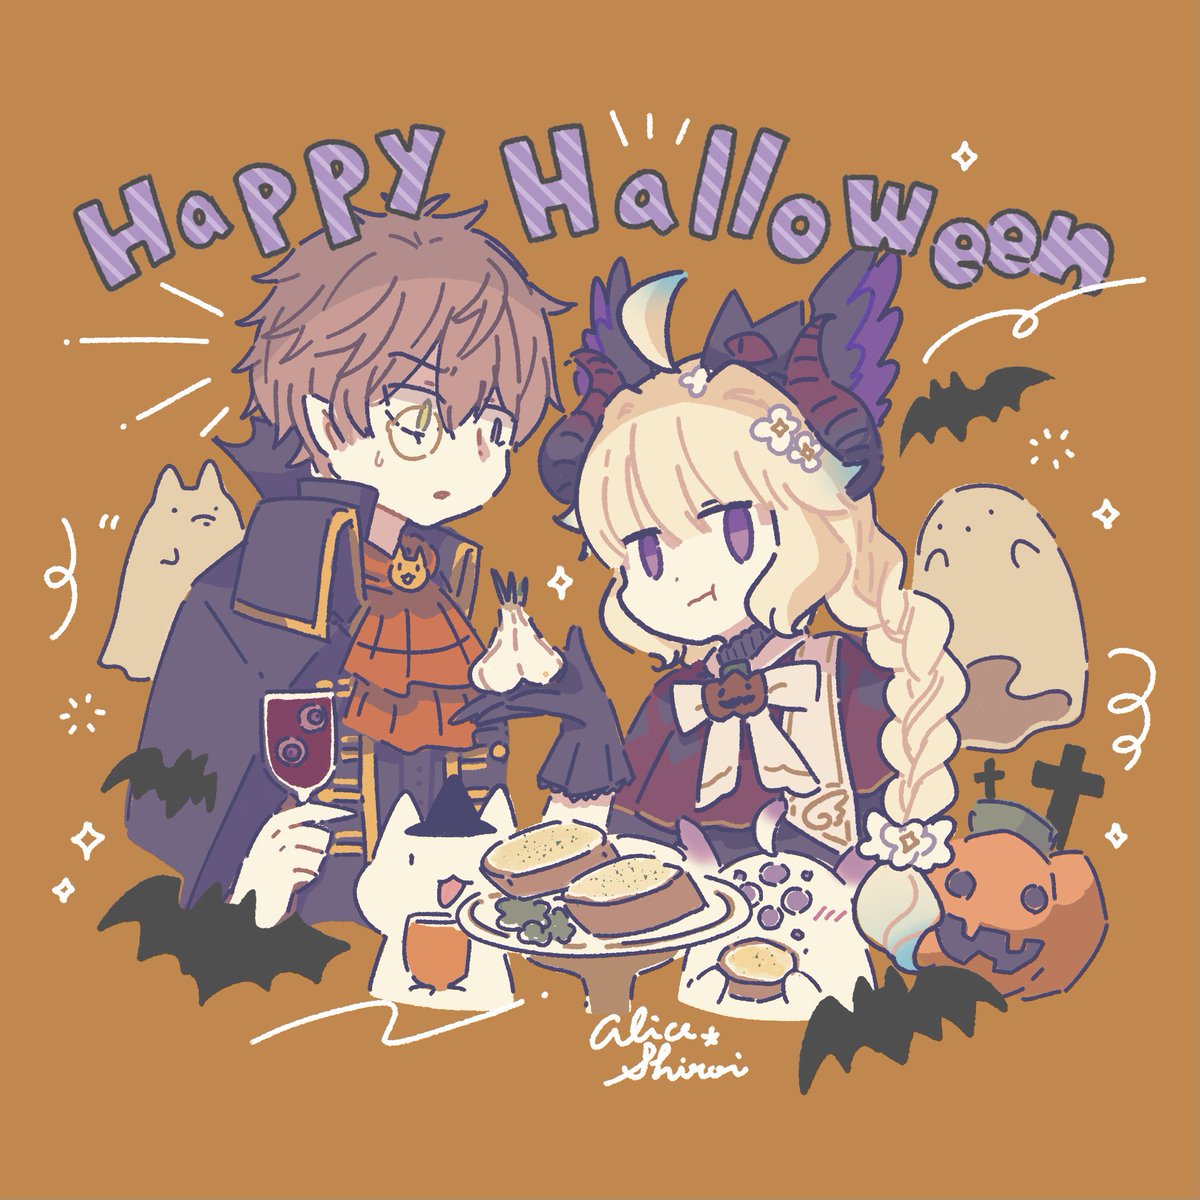 「Happy Halloween againI looooove garlic b」|城井有栖💌原稿中のイラスト